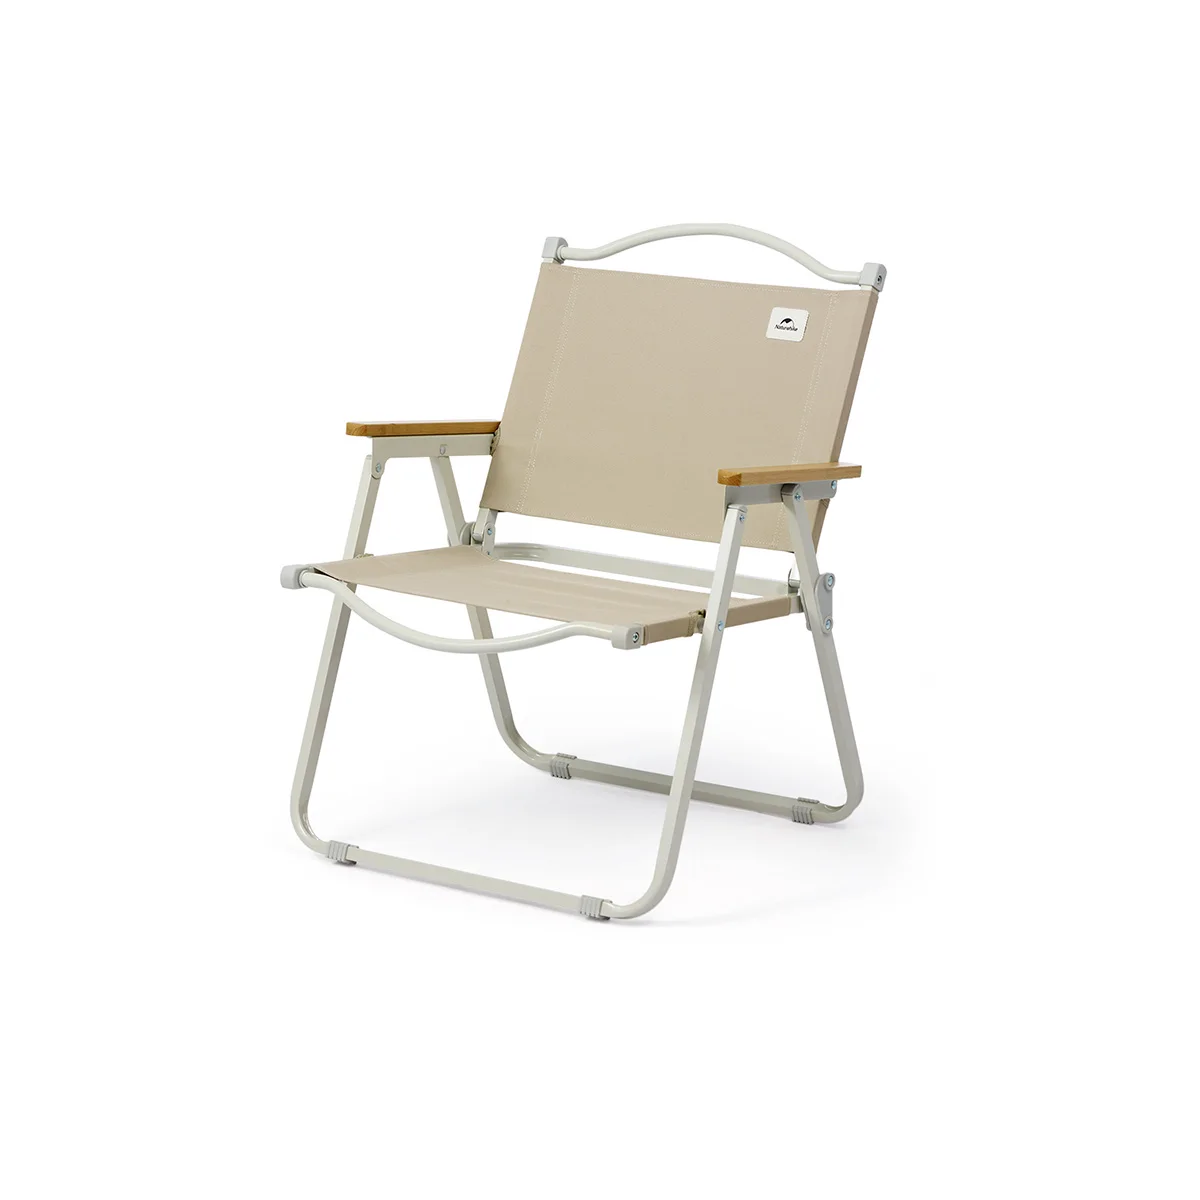 E folding adult armchair children s kermit chair camping deck chair picnic beach chairs thumb200